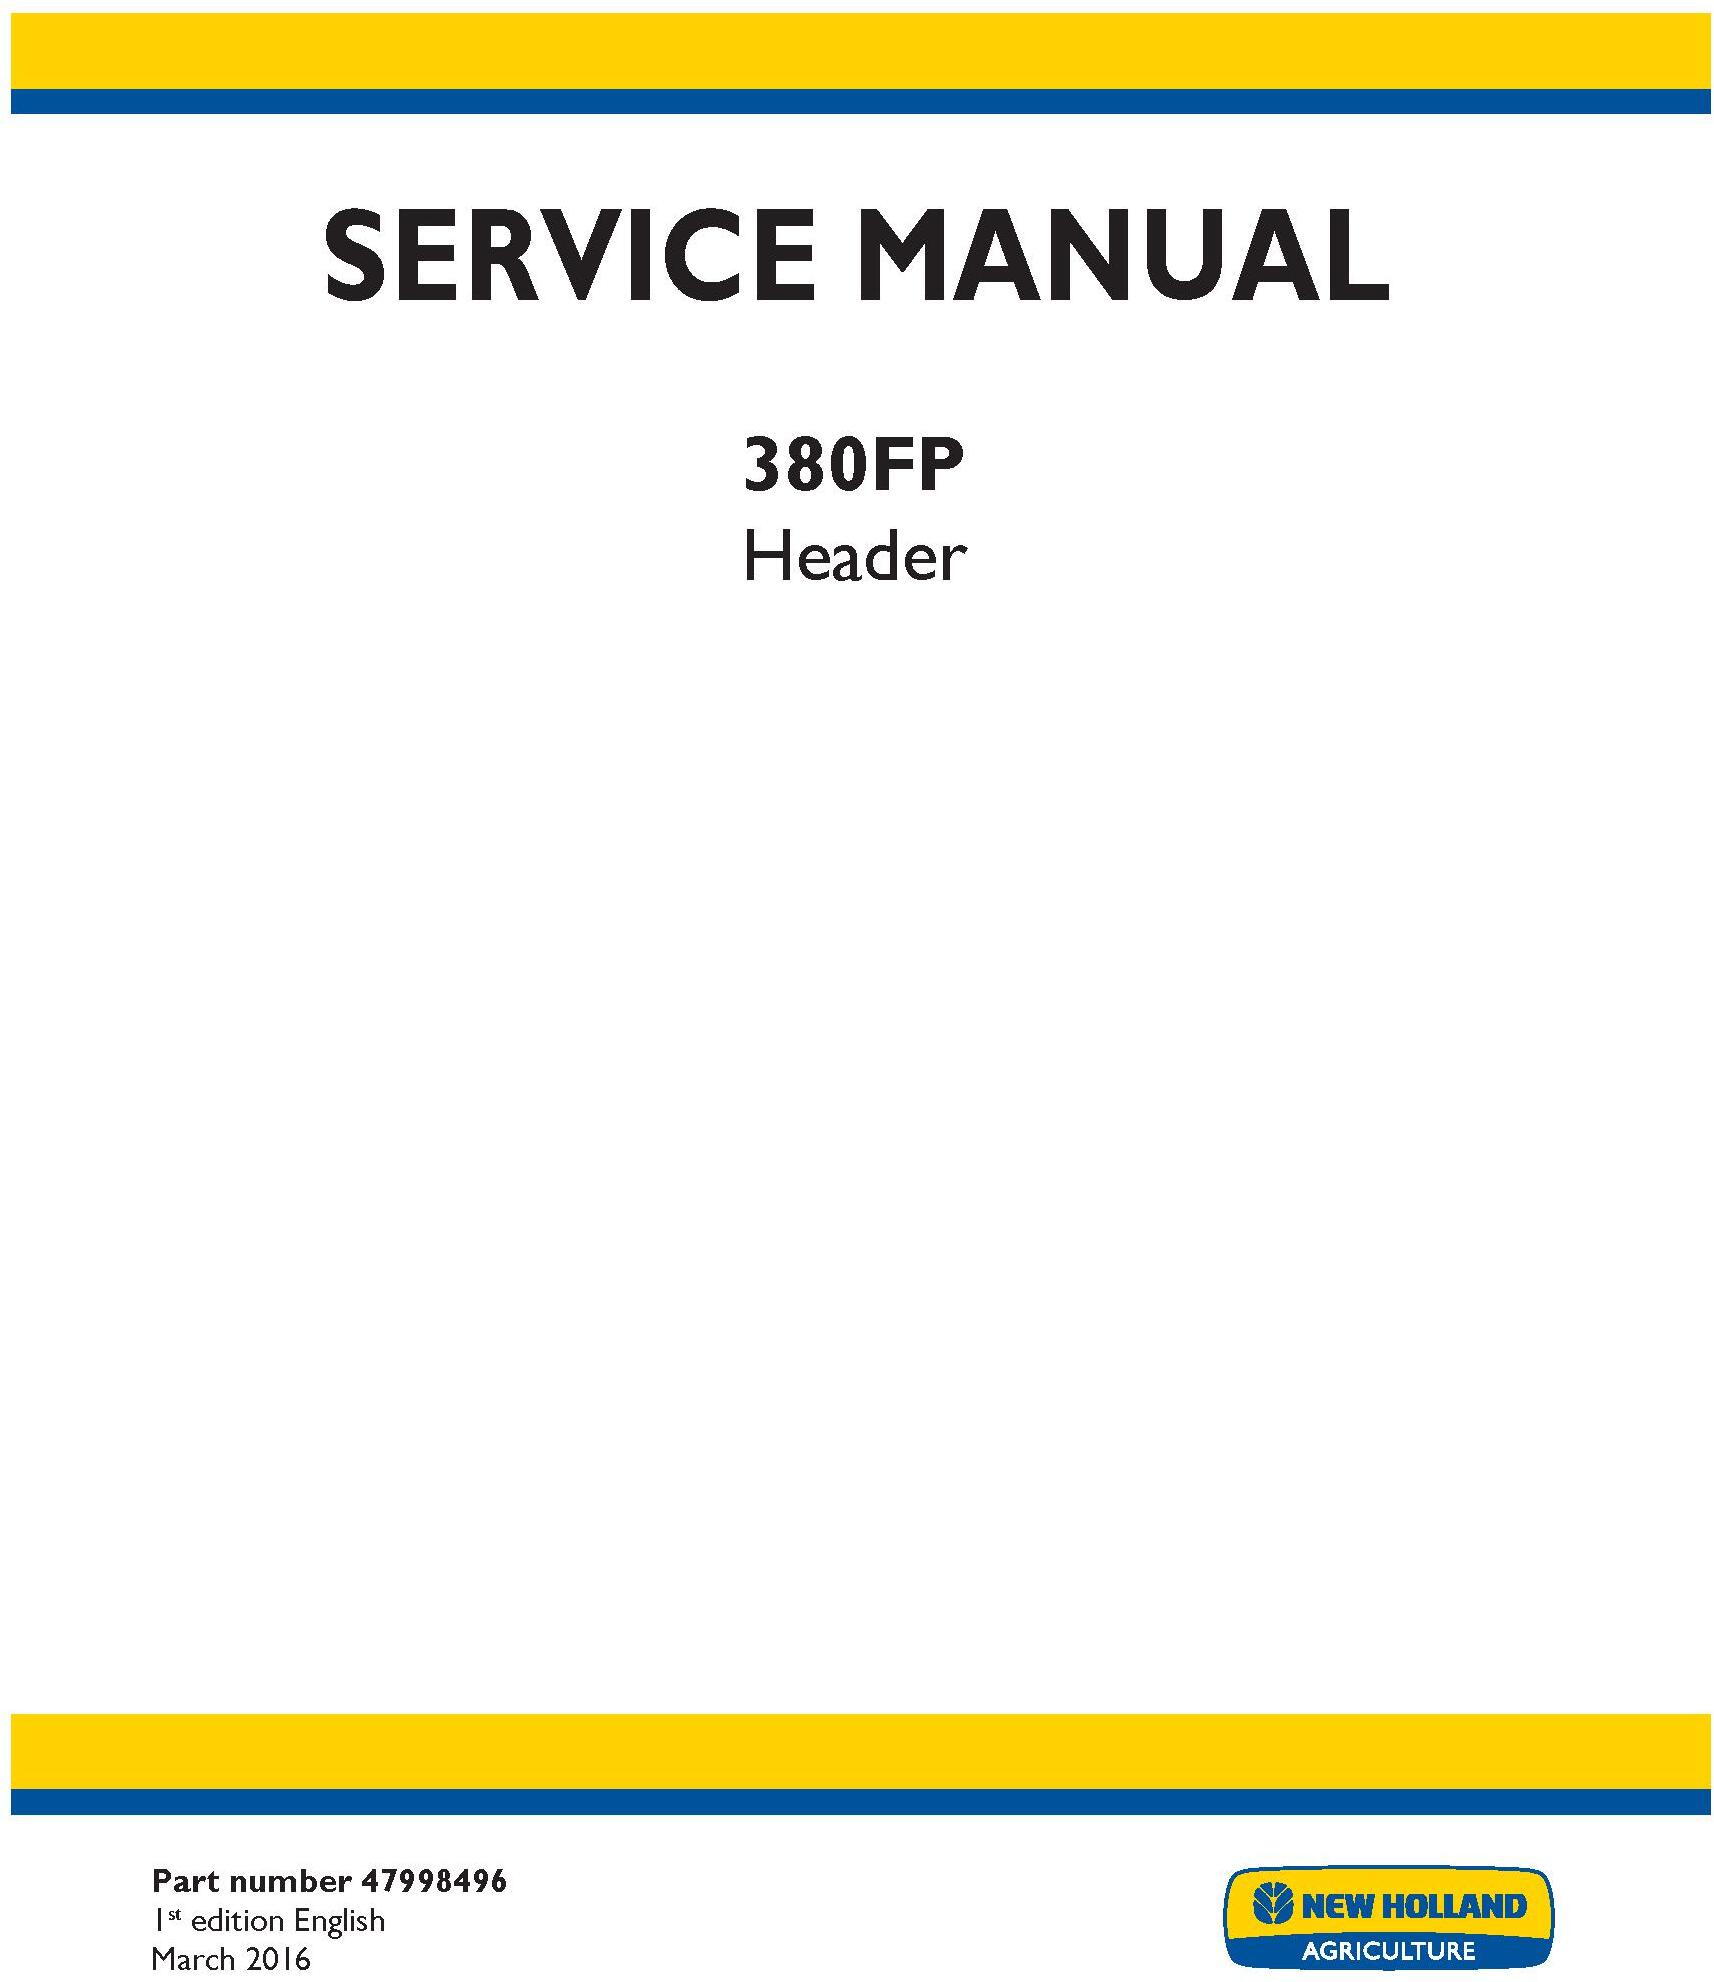 New Holland 380FP Header Service Manual - 20044